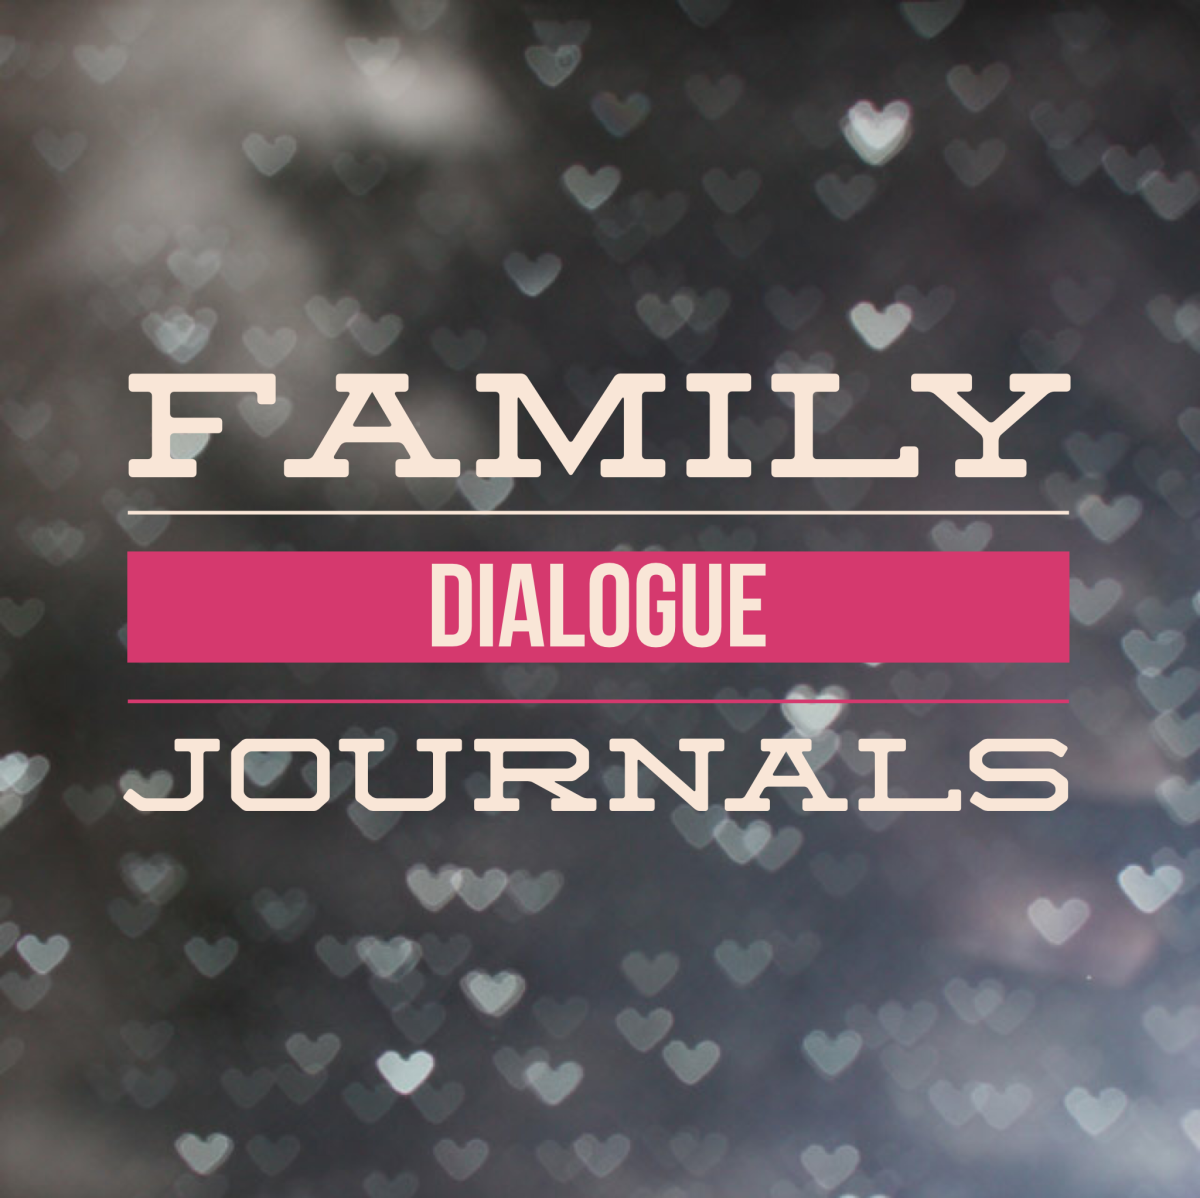 Family Dialogue Journals